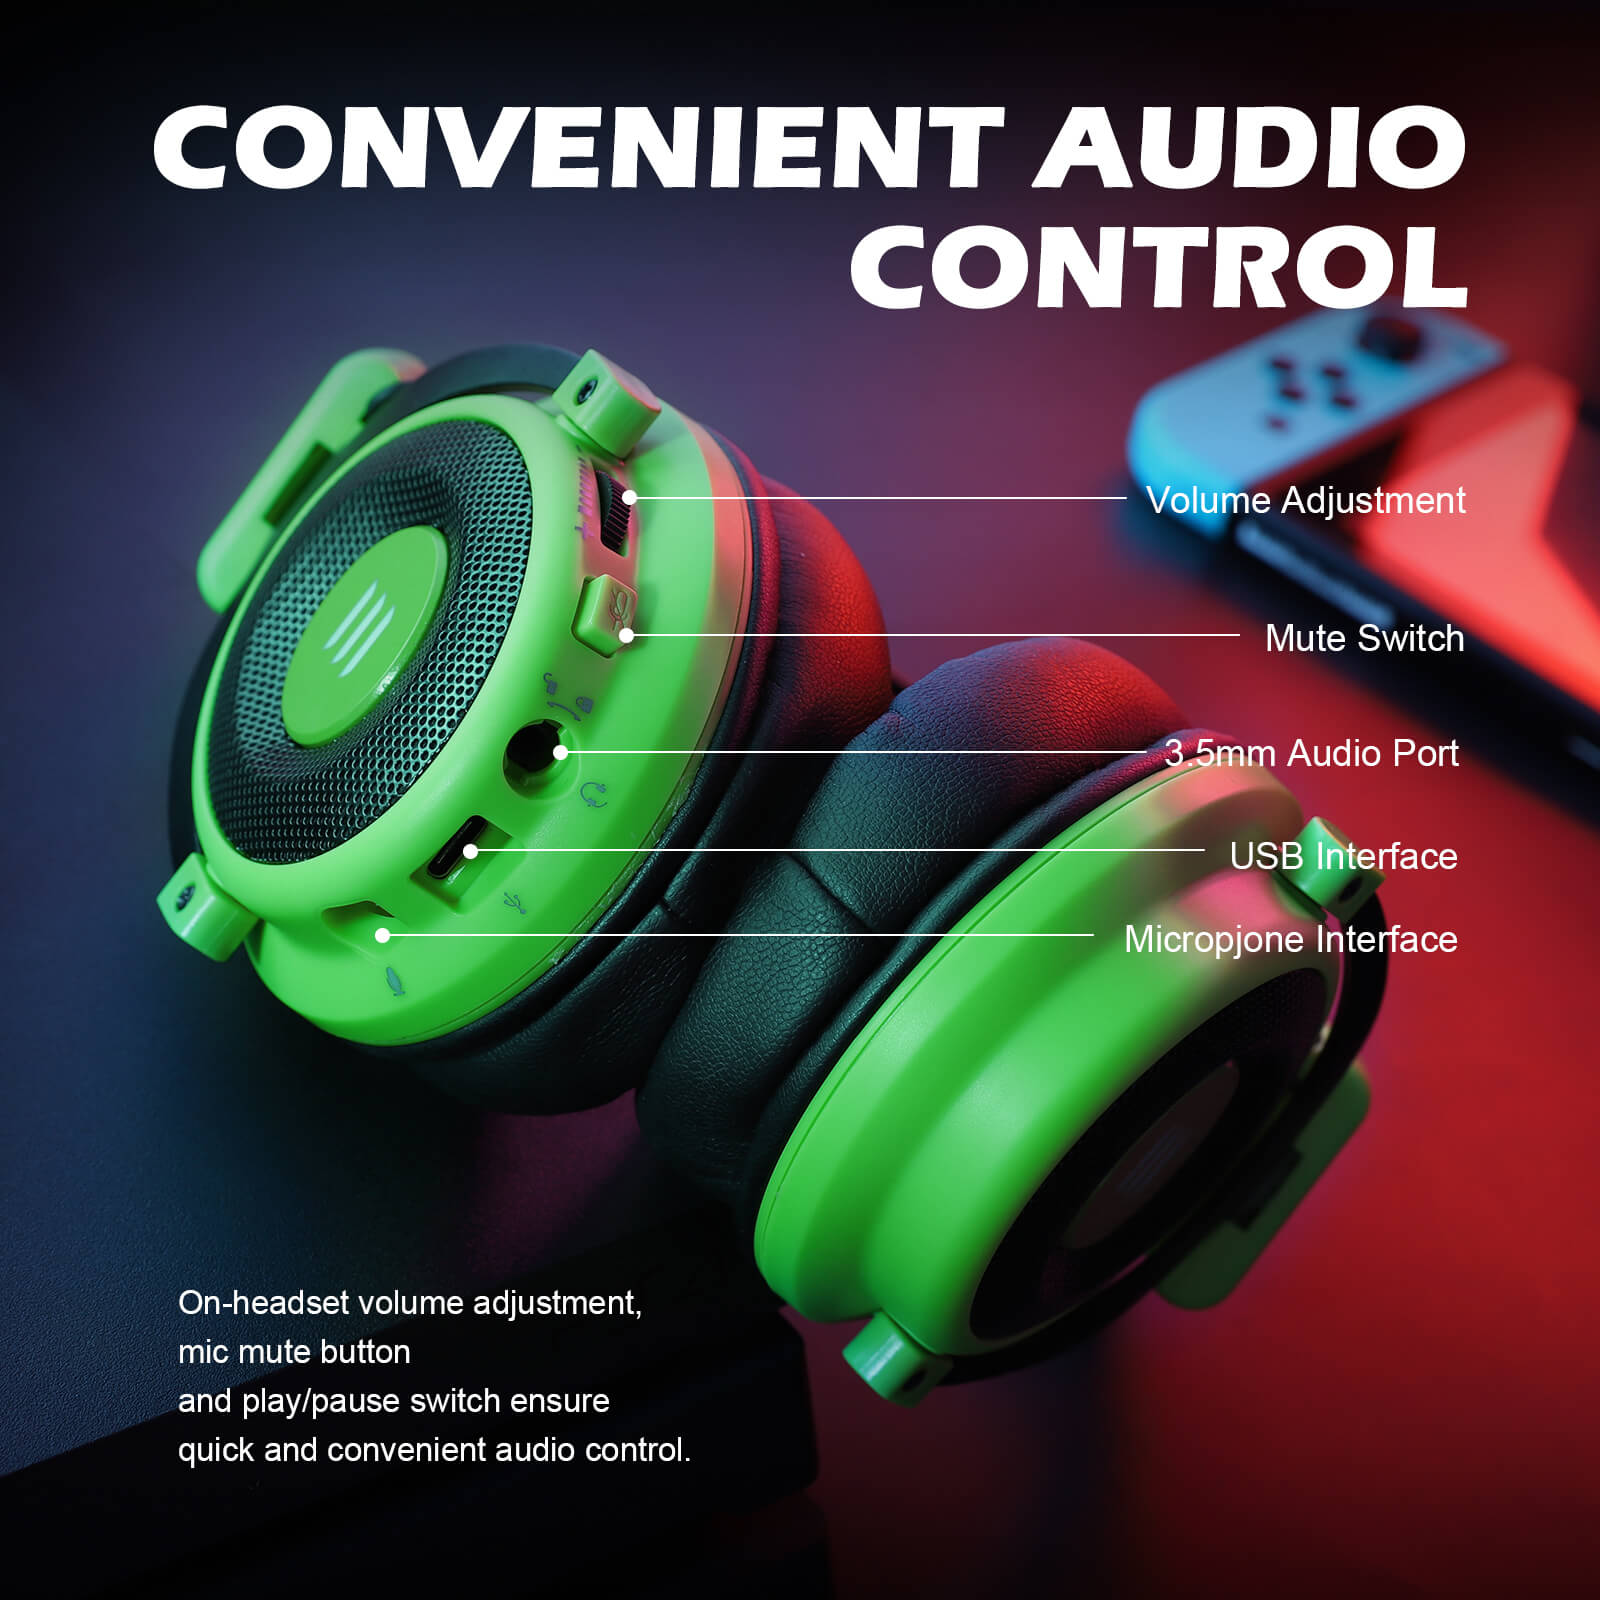 E900pro Headset, Green Headset EKSA-TRADE Gaming Gaming Over-ear